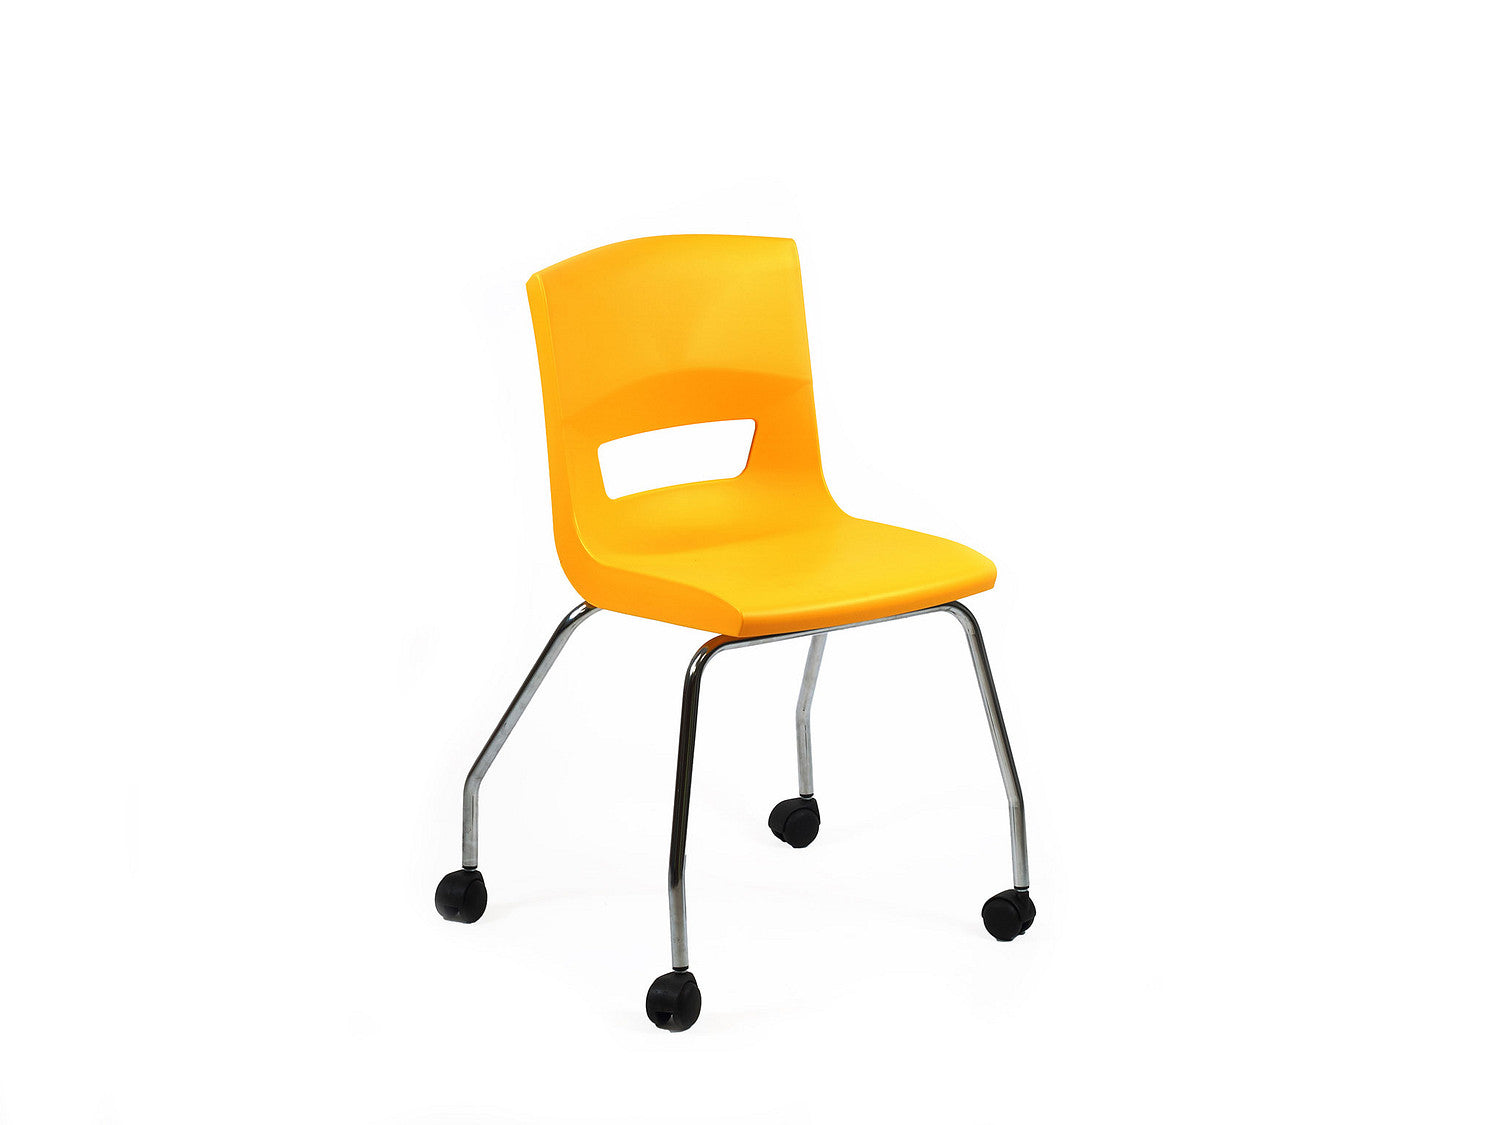 Postura 4 legs on castor unique stlye classroom chair sun yellow